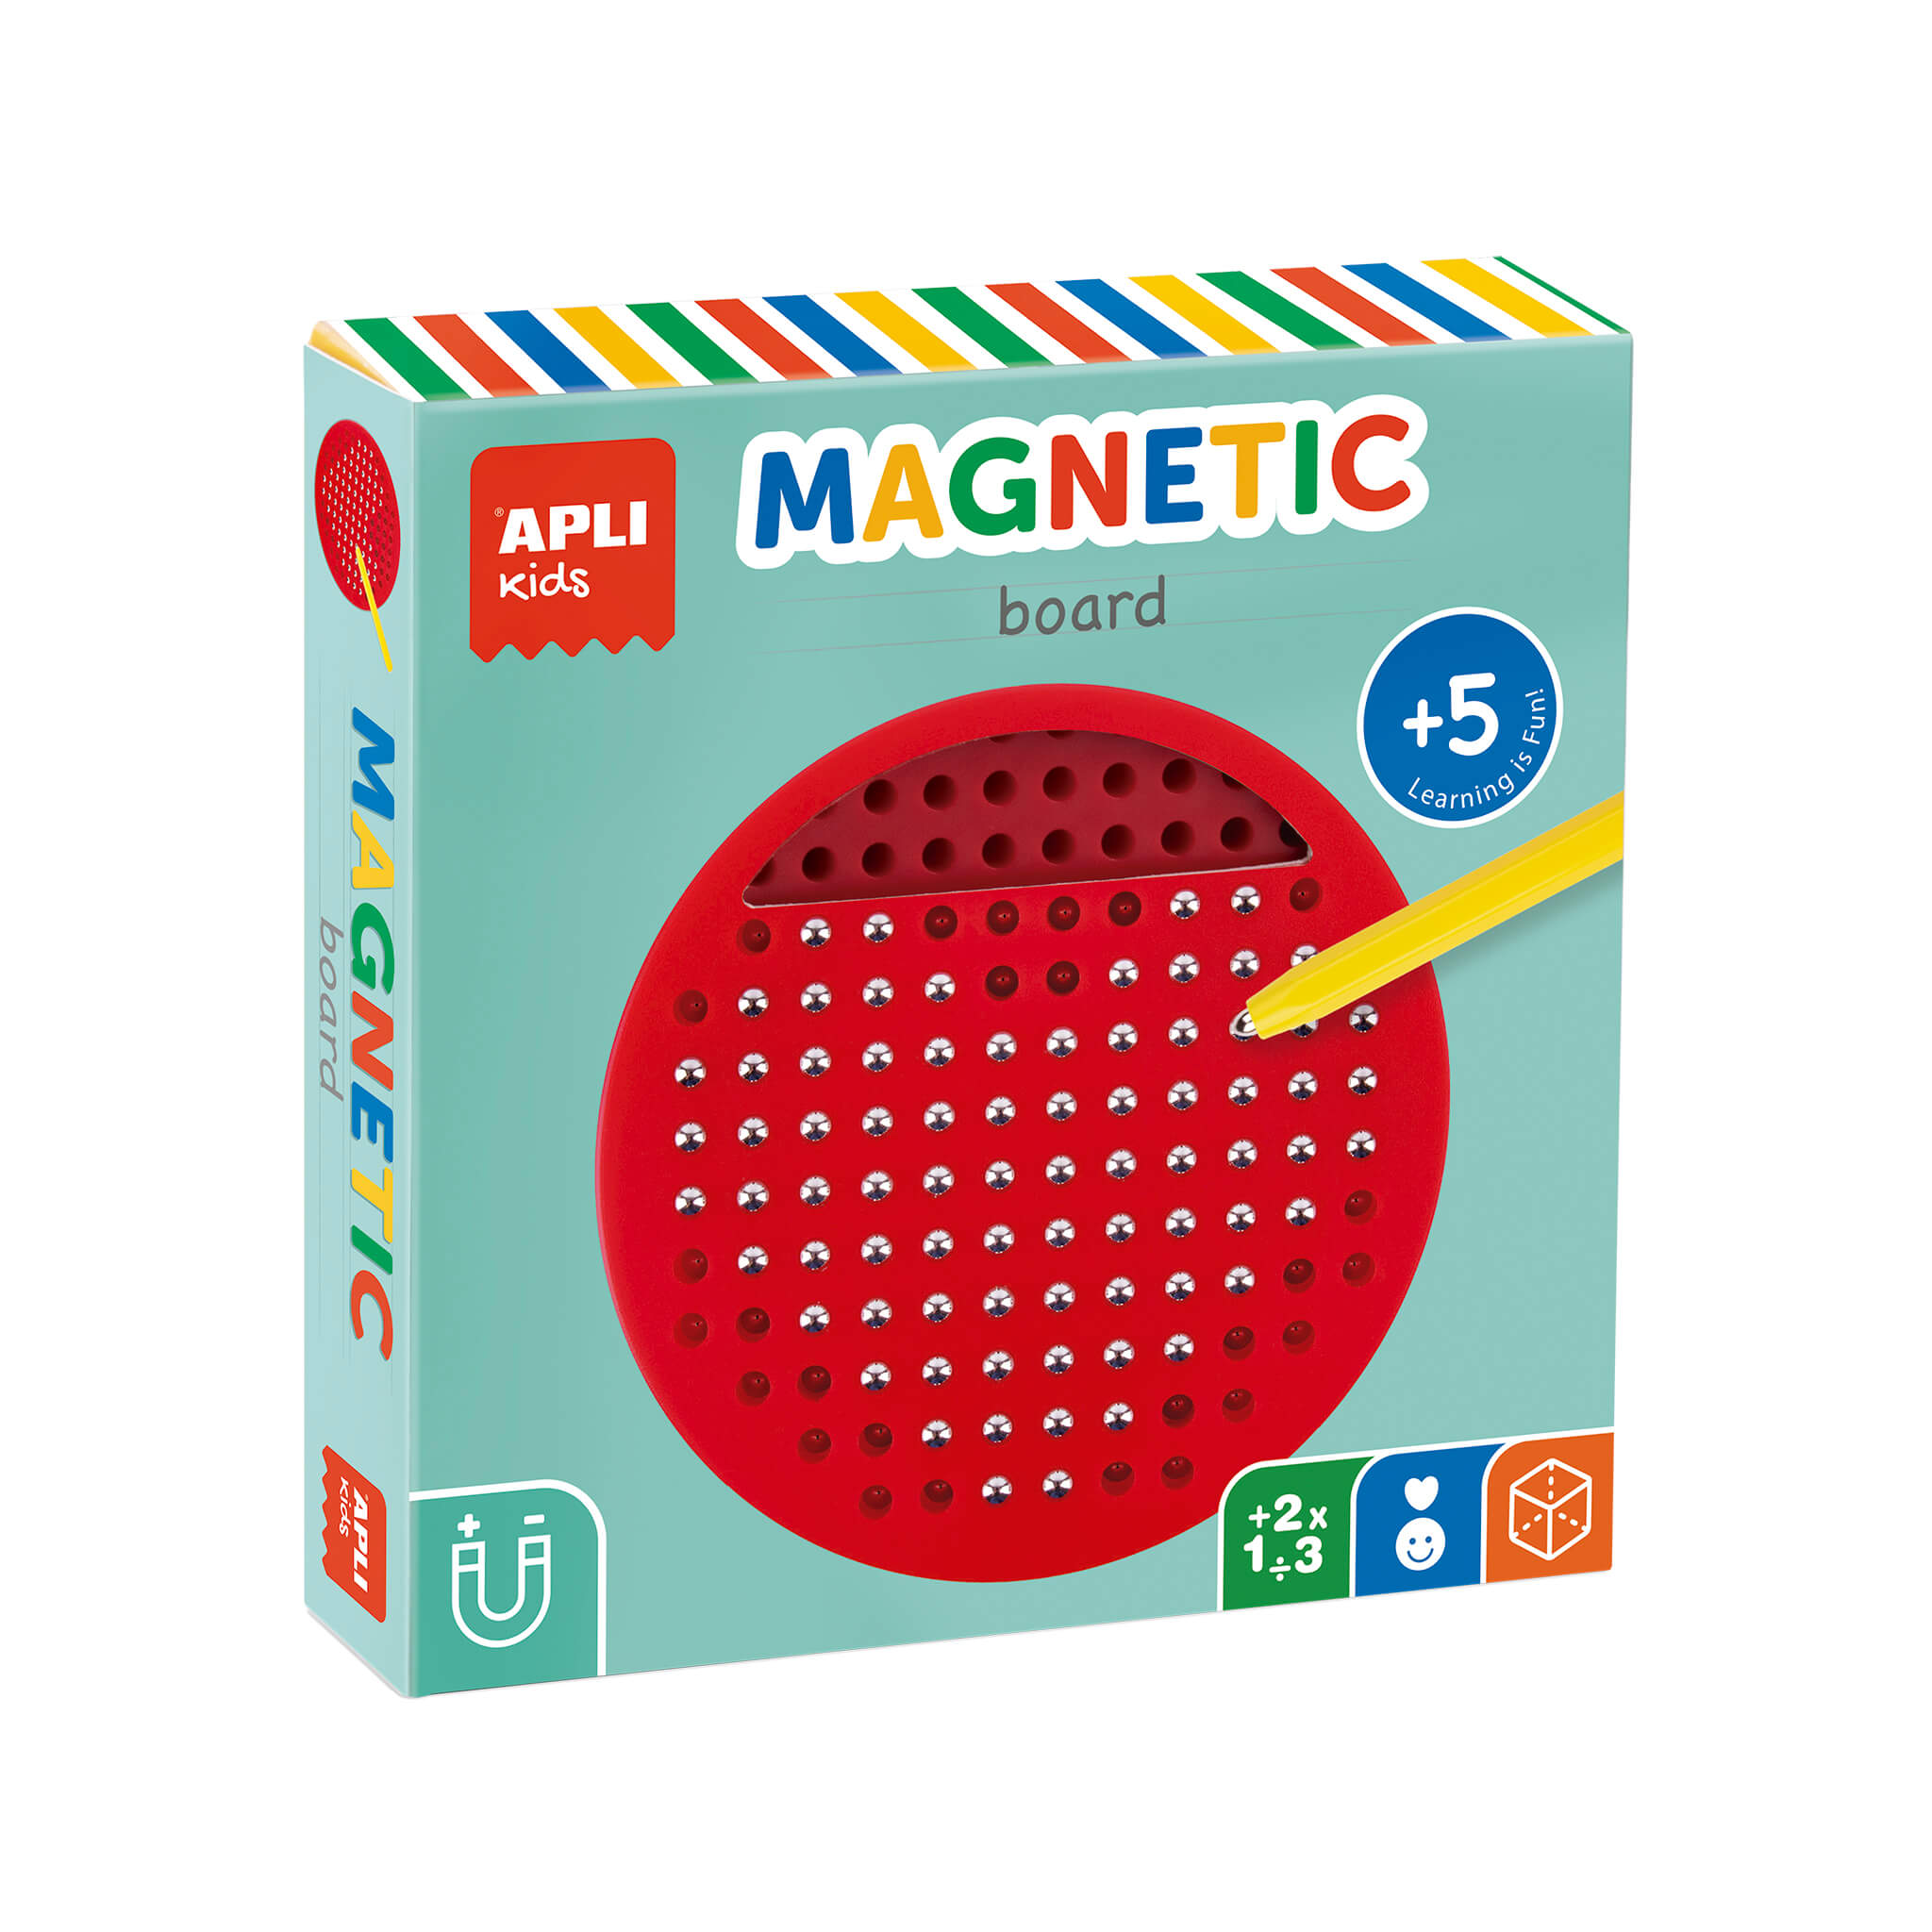 Mini magnetic board